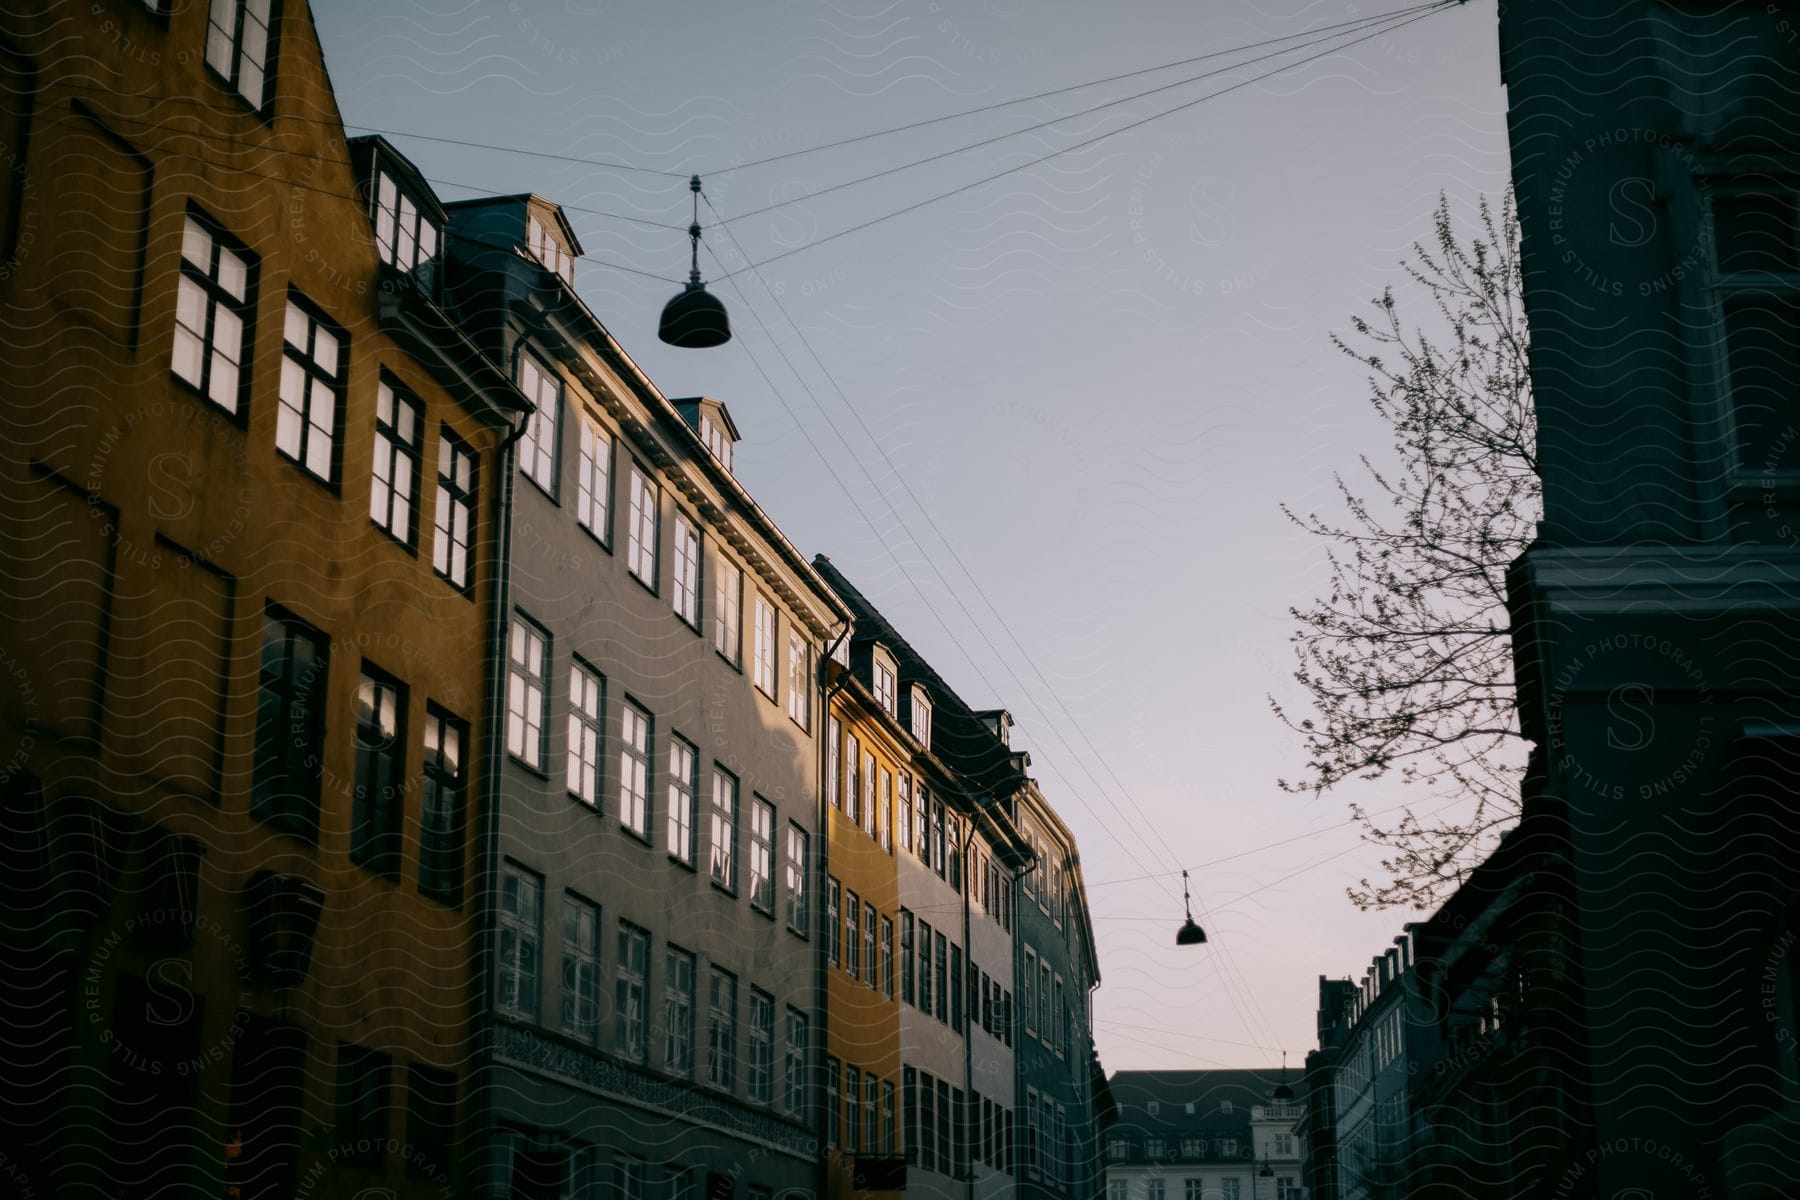 Wires are connected above a street between buildings in copenhagen